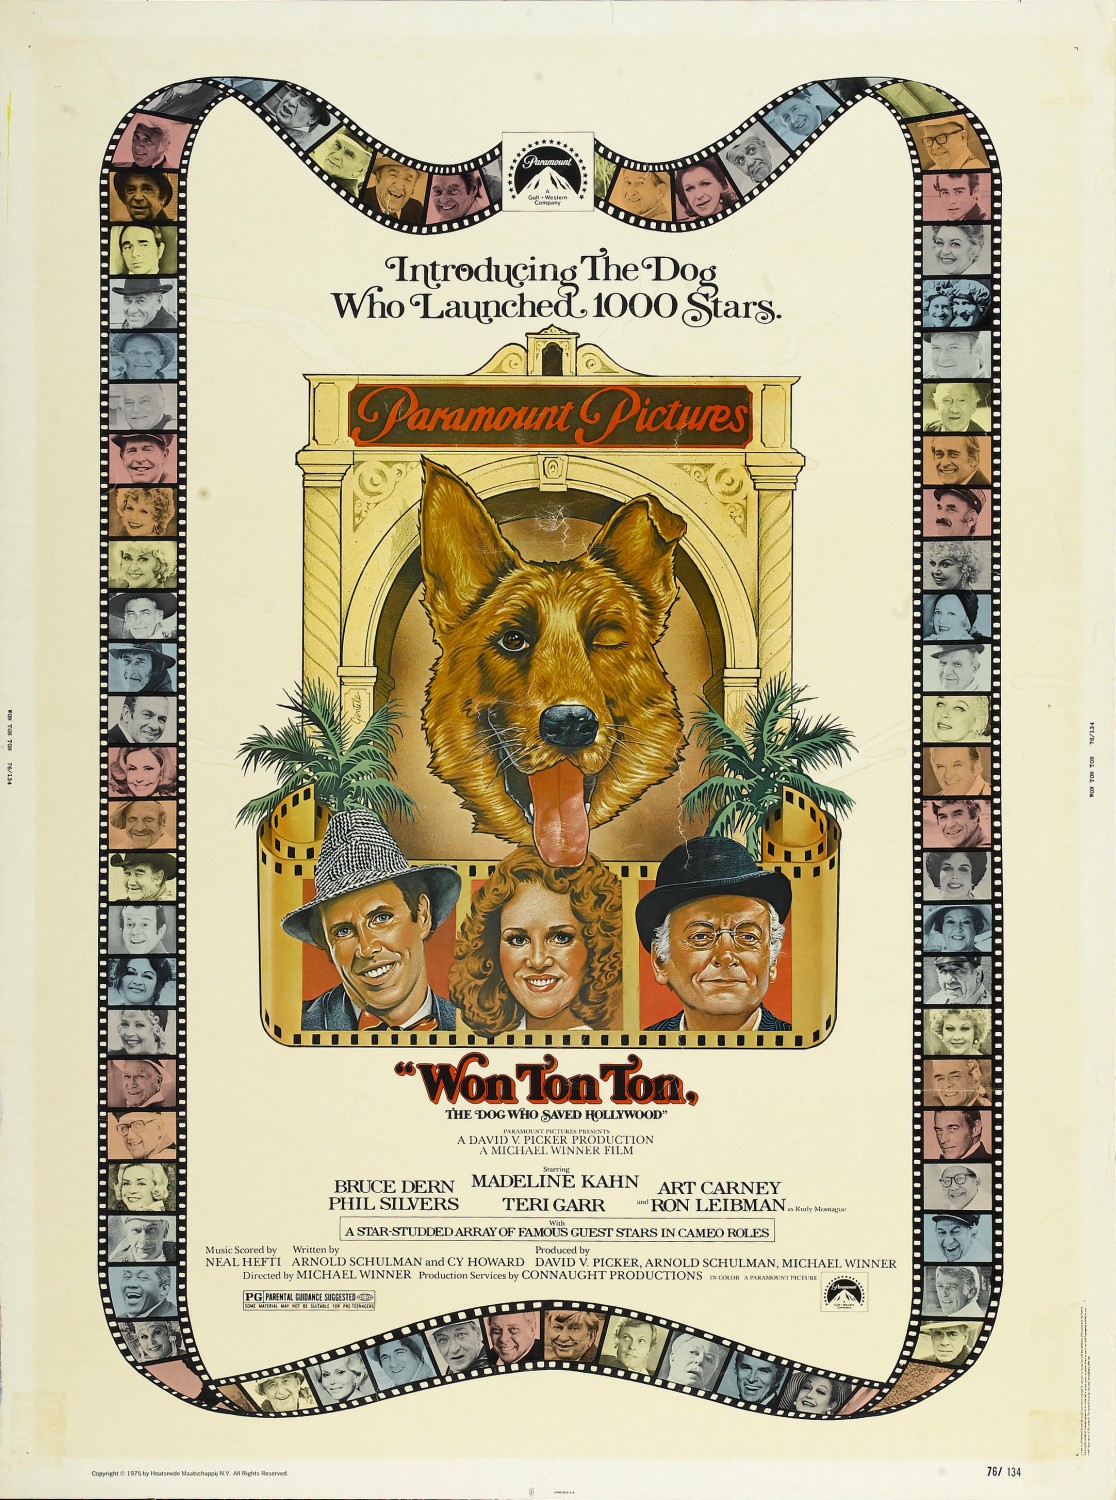 Extra Large Movie Poster Image for Won Ton Ton: The Dog Who Saved Hollywood 